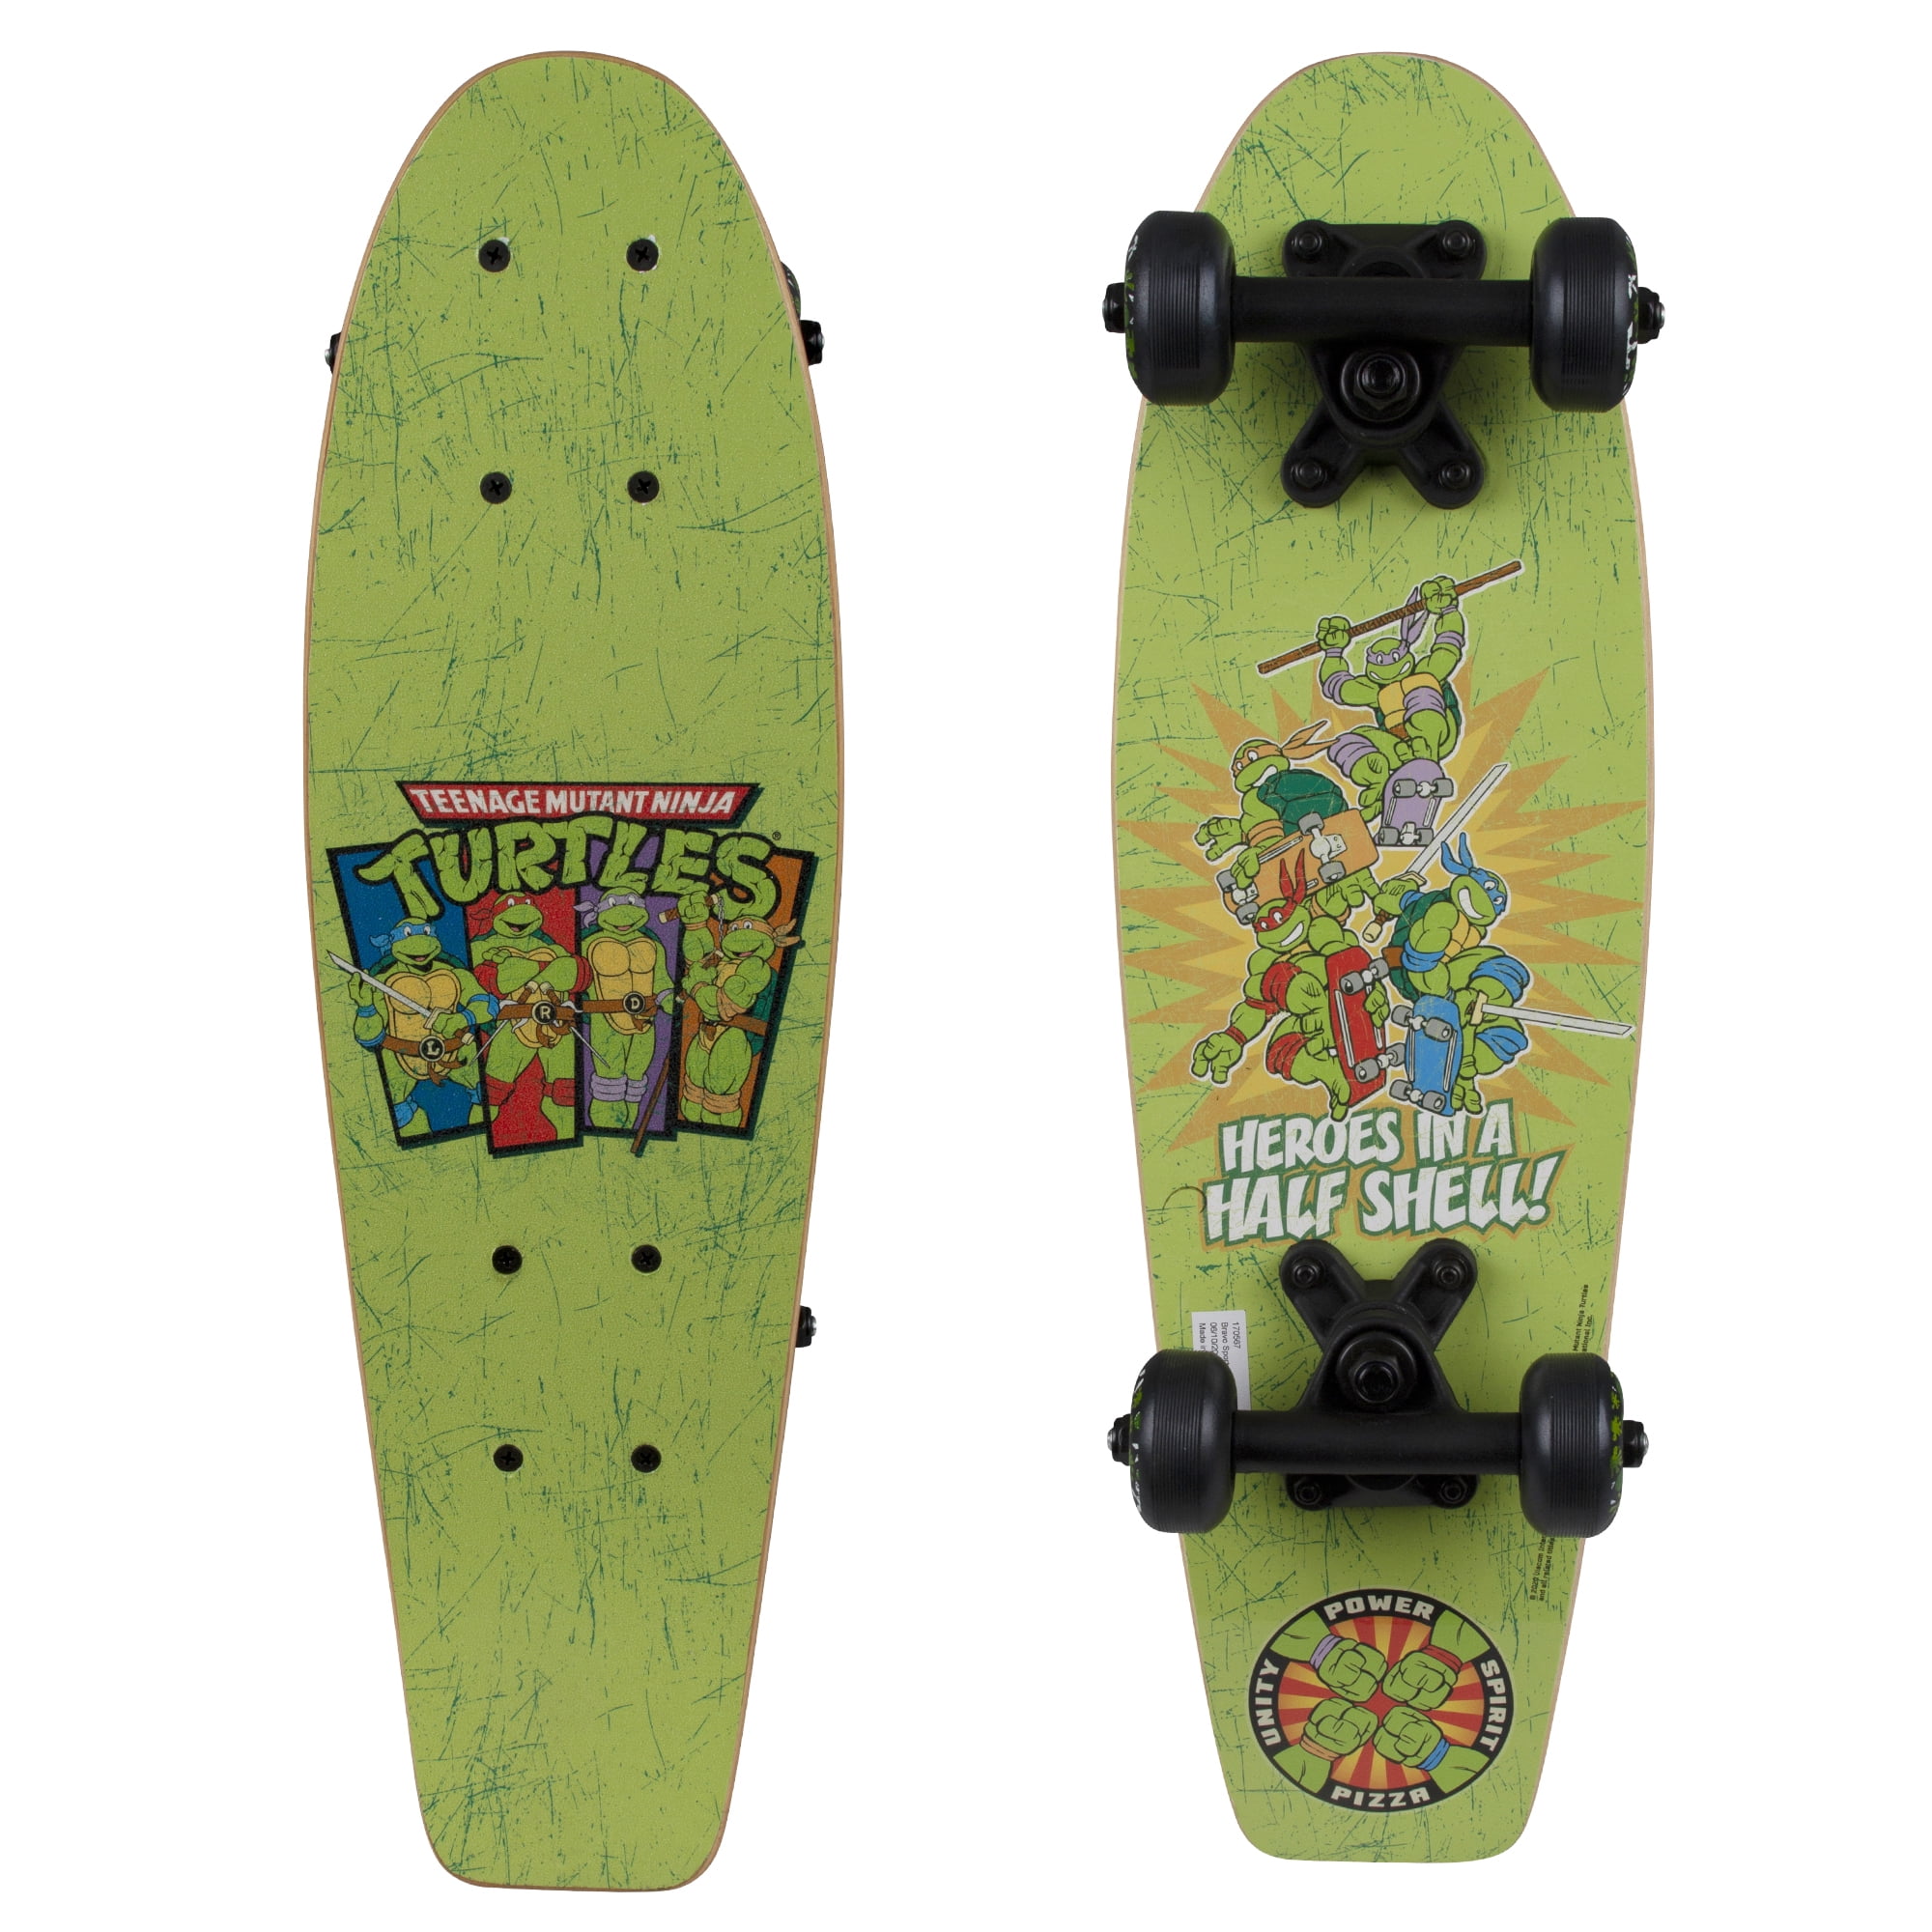 New Green Teenage Mutant Ninja Turtles Skateboard Kids Skate Board Boy Gift 21in 